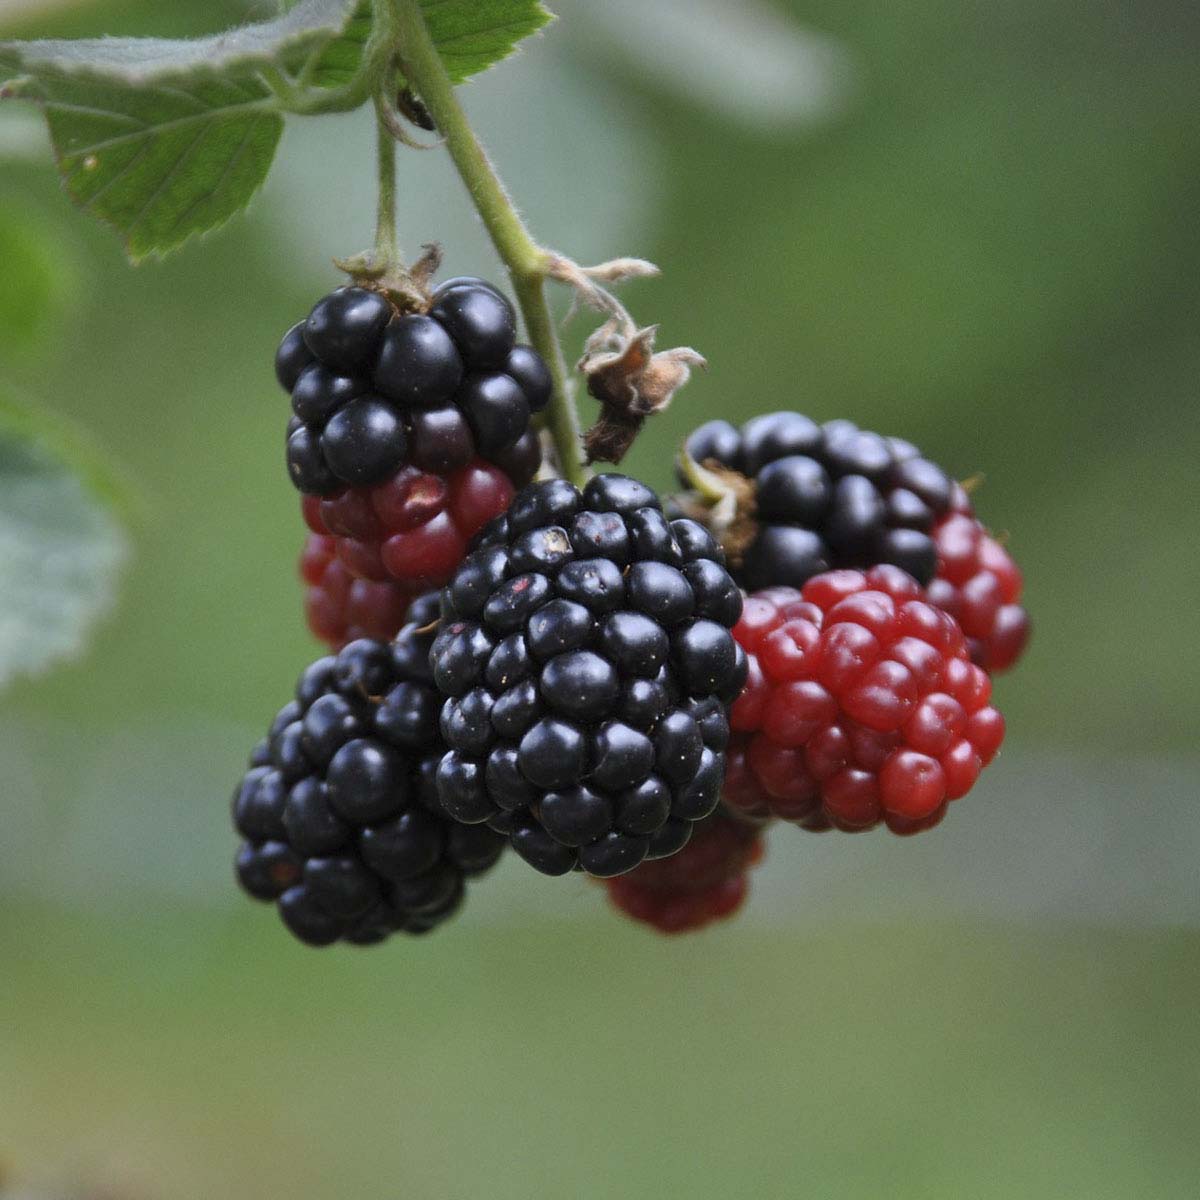 Ripe blackberries dangle from the bush.